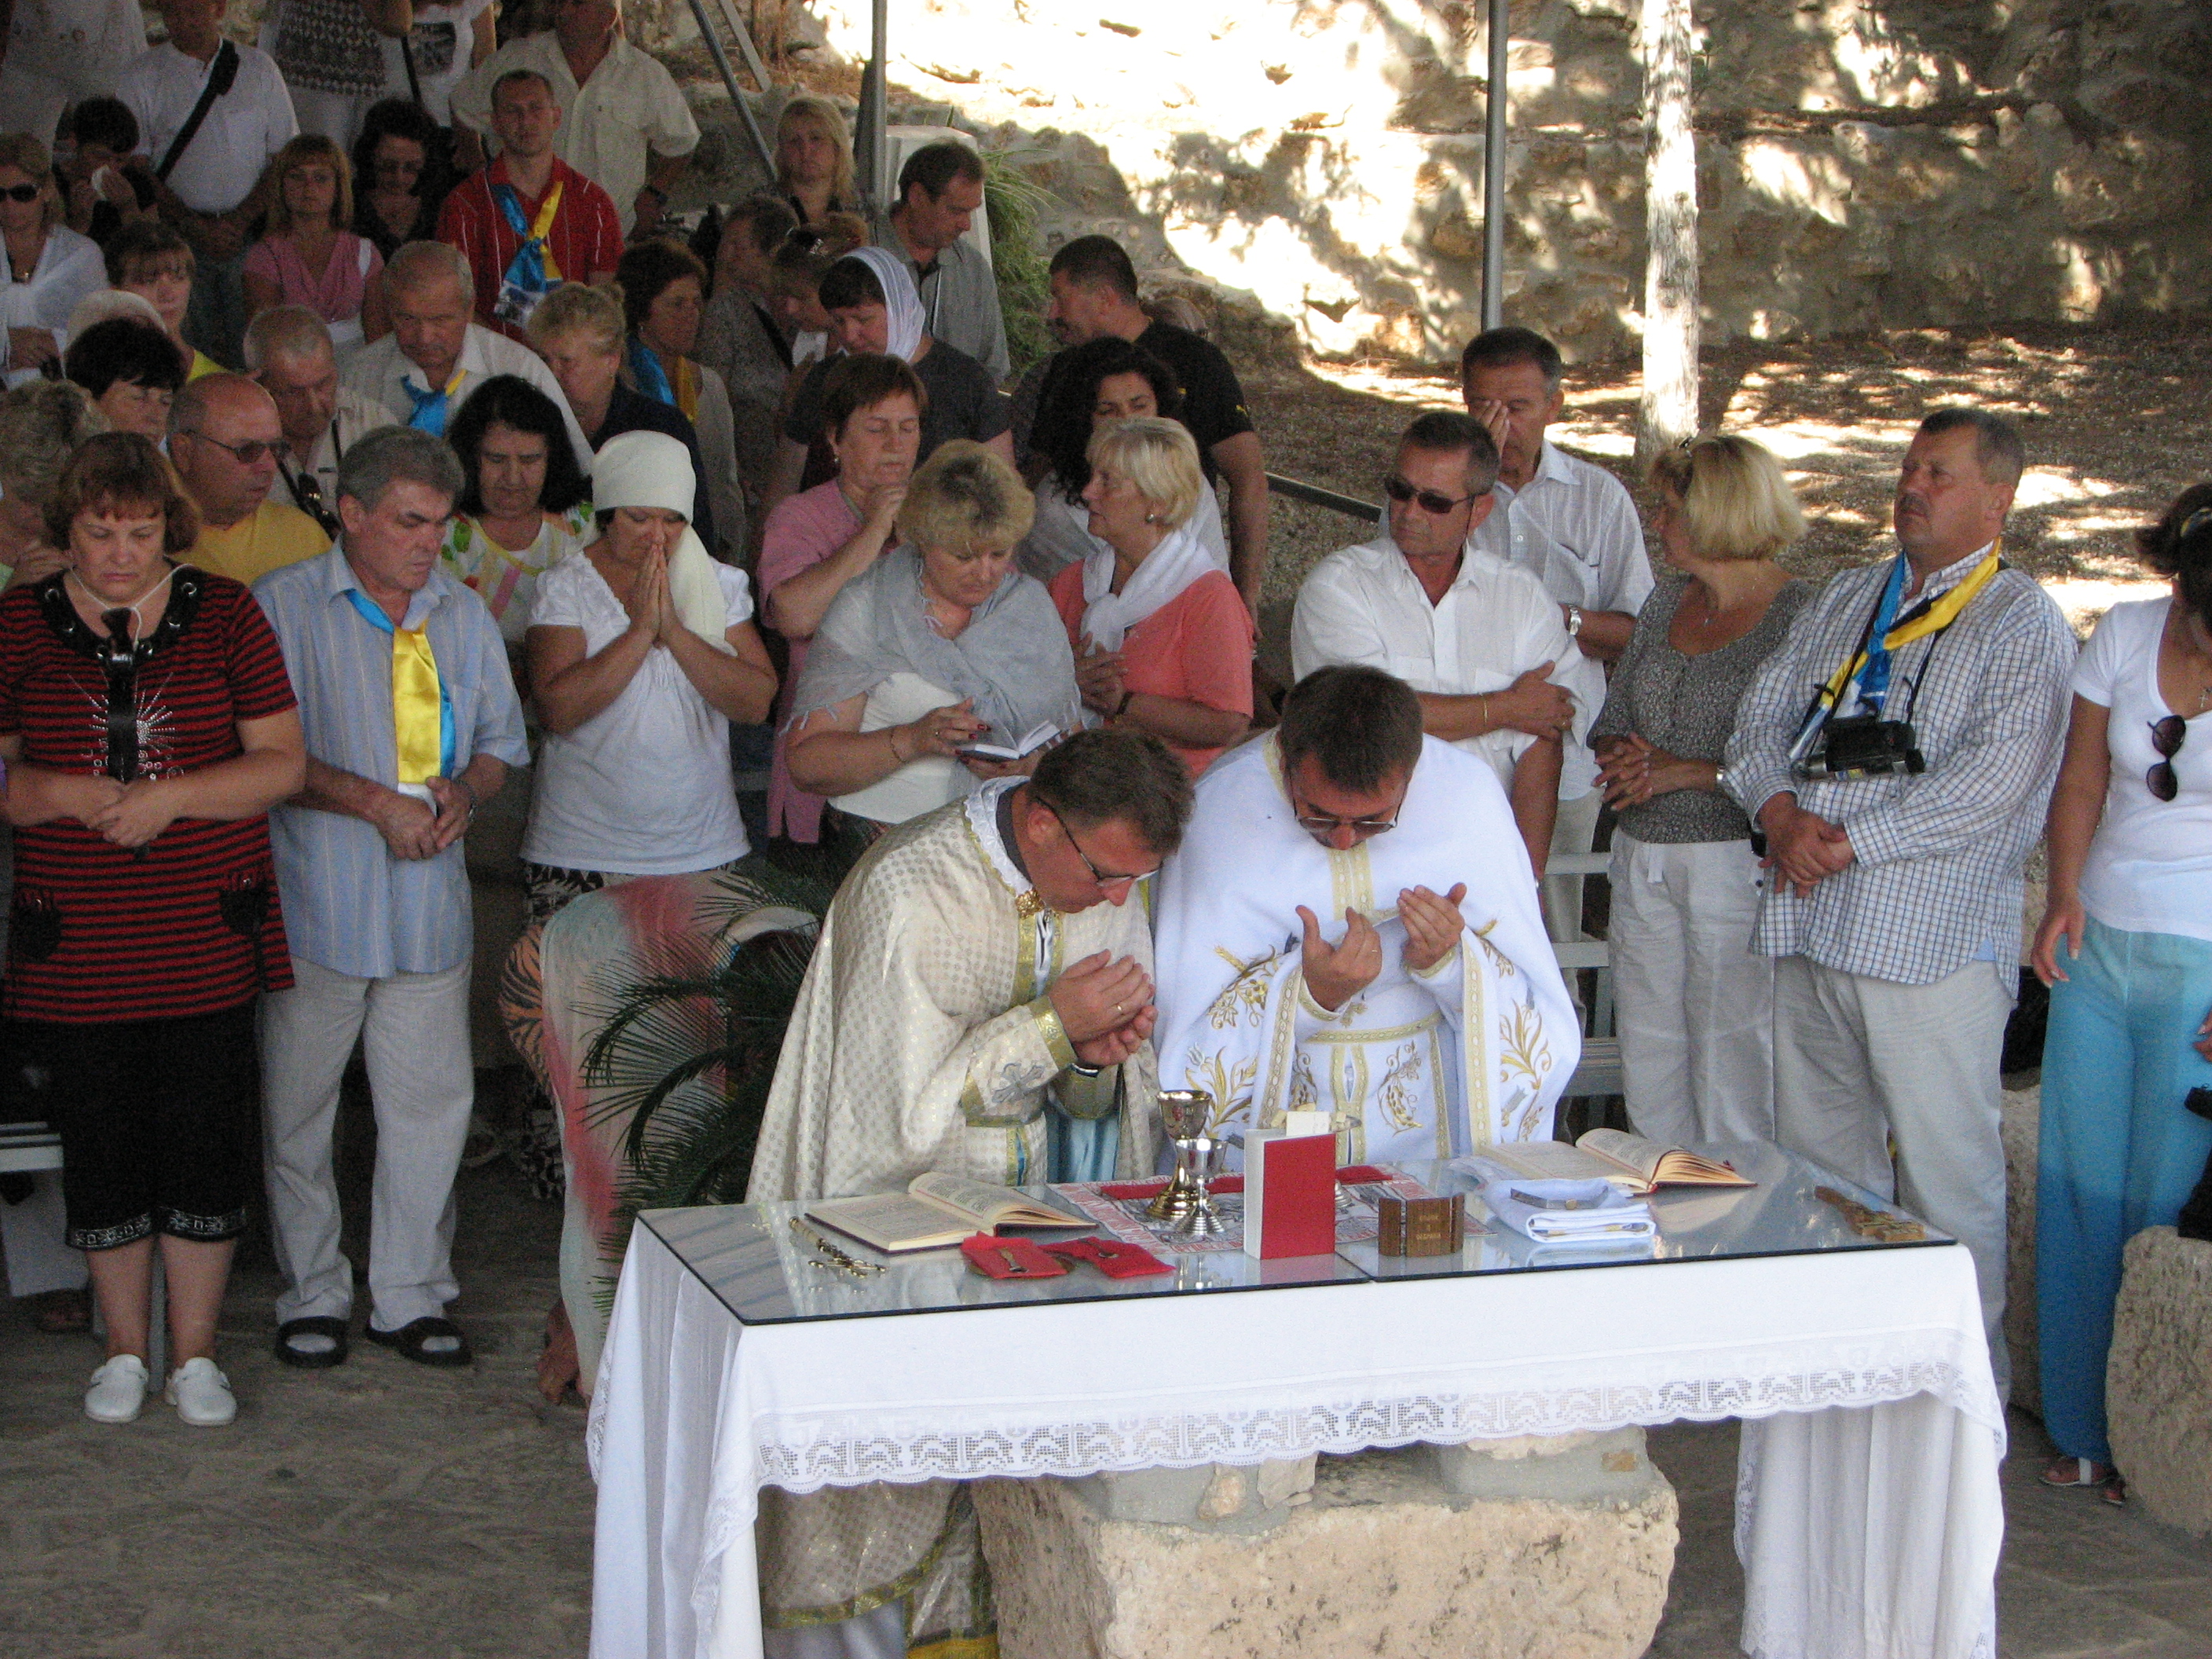 Church service of Catholic pilgrims in Bethlehem, Palestinian Territories, picture 3